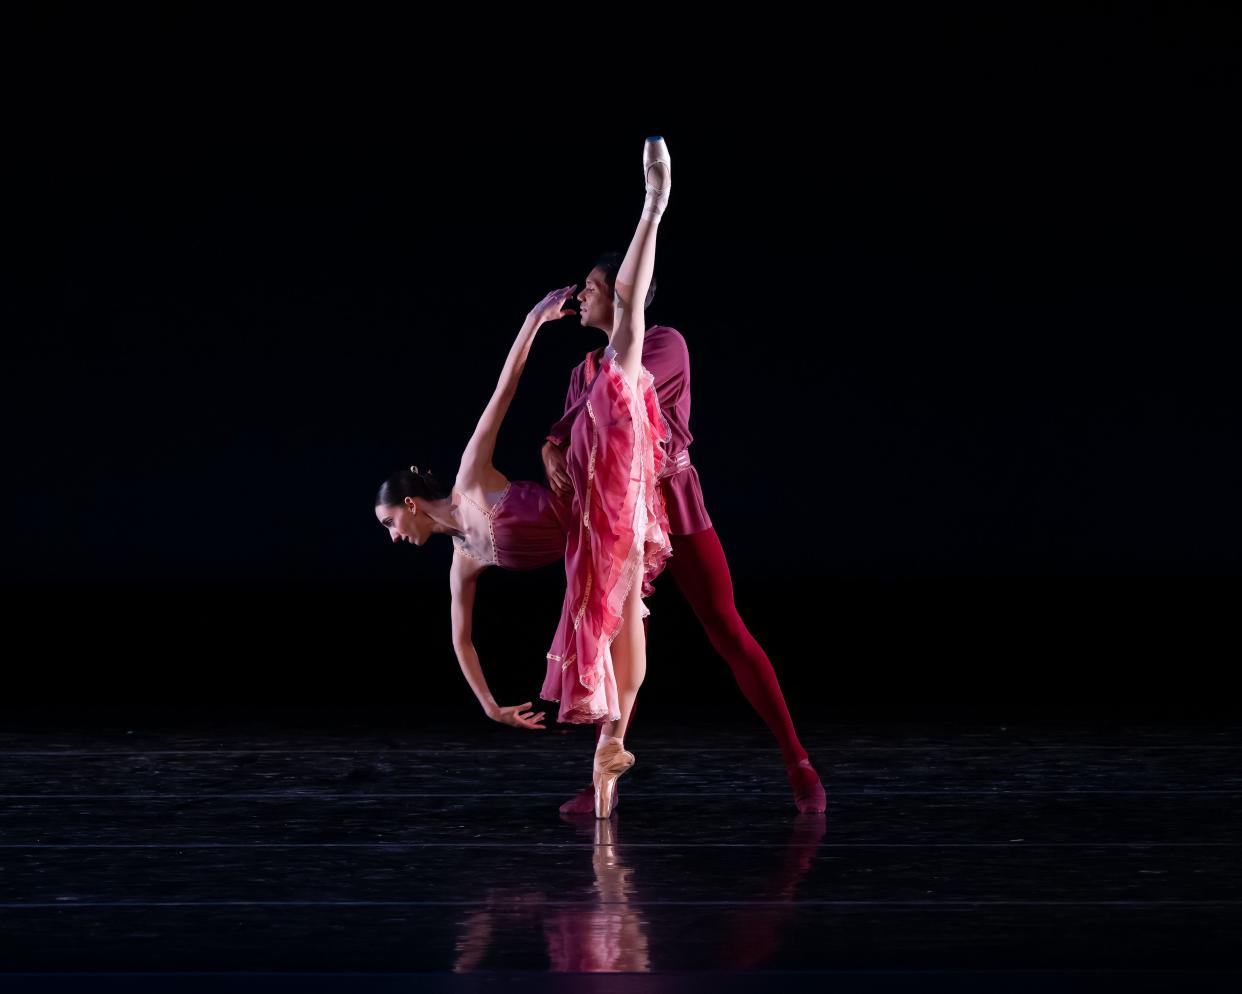 Kelly Korfhage and Bryan Salinas of Verb, "Ohio Contemporary Ballet" perform Gerald Arpino's "Celebration."